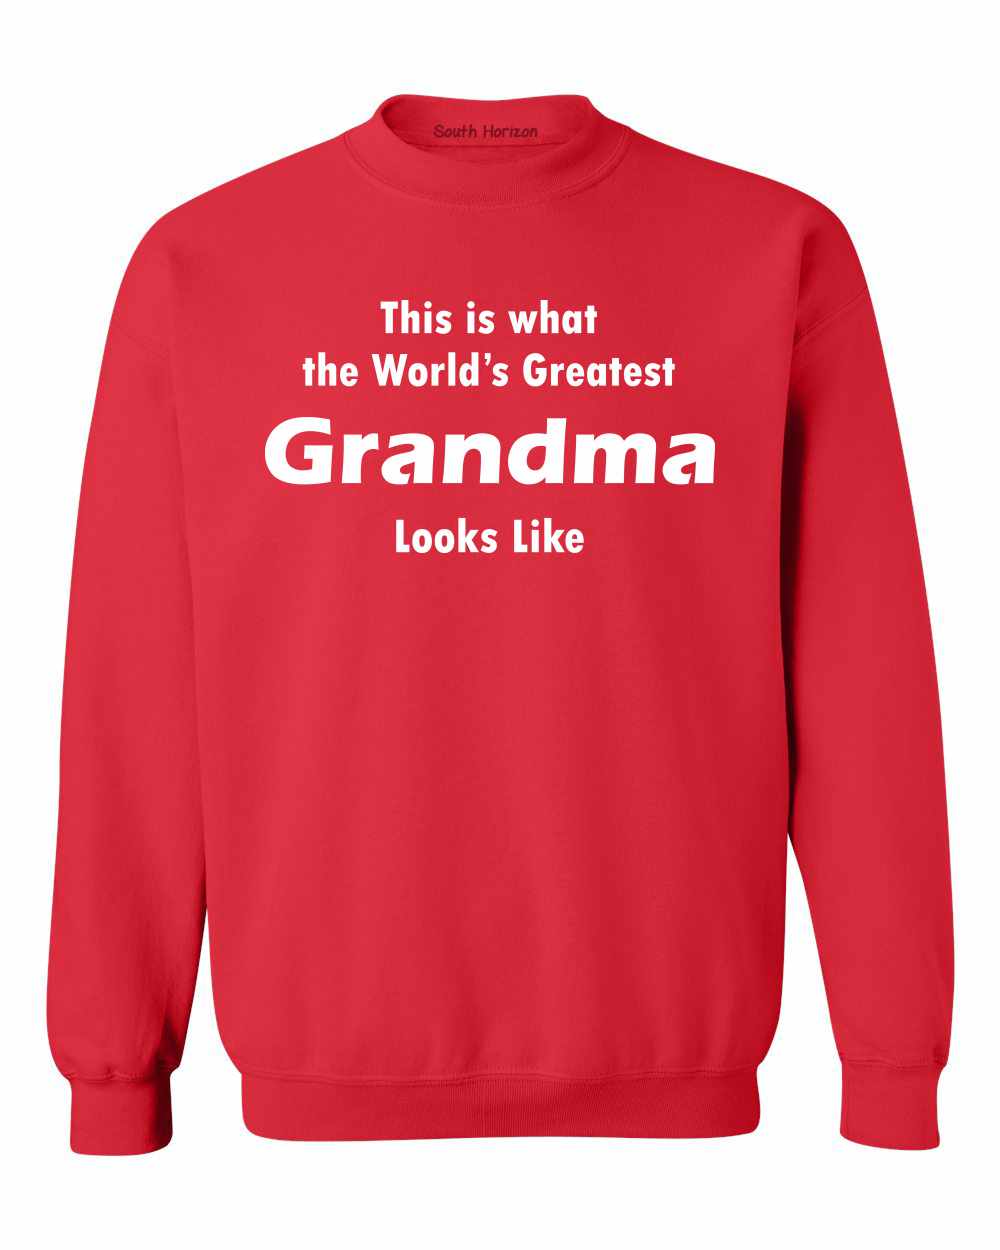 This is what the World's Greatest Grandma Looks Like on SweatShirt